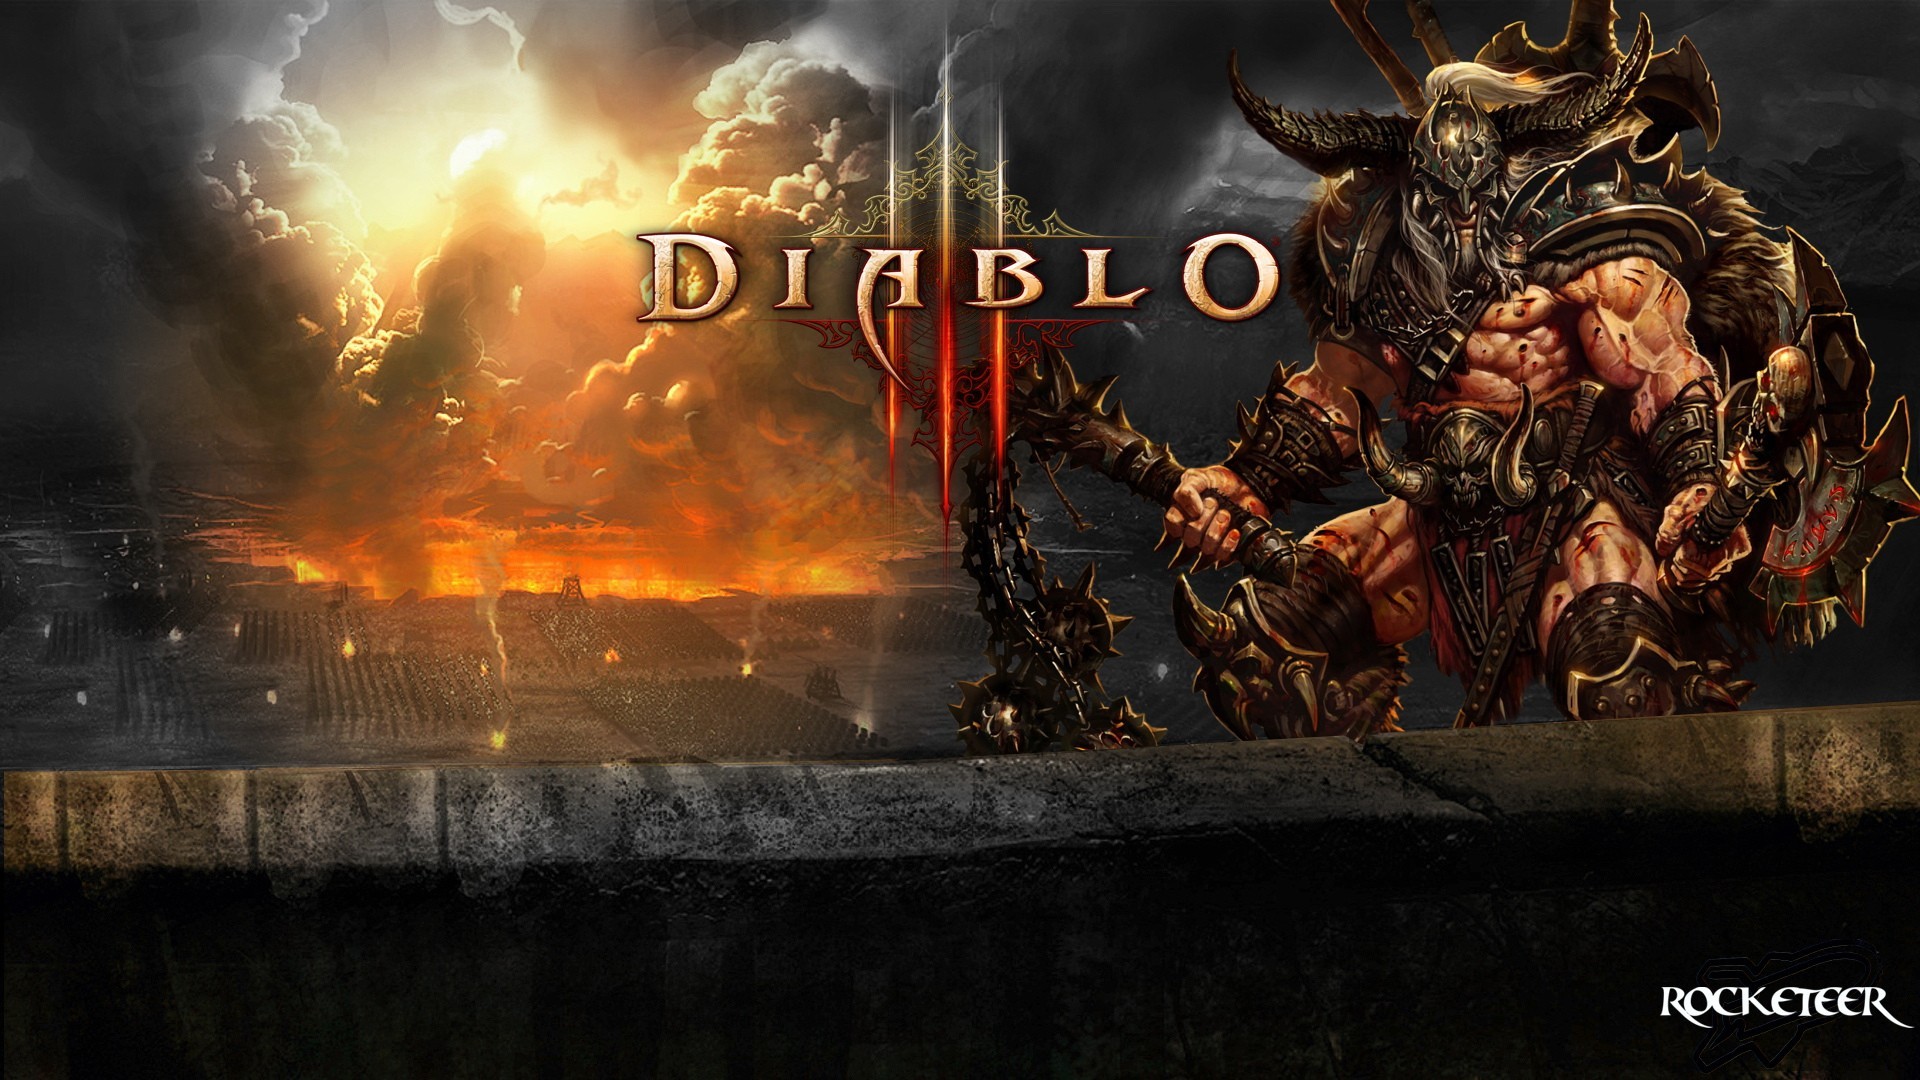 General 1920x1080 Diablo III video games video game art PC gaming fantasy art Blizzard Entertainment muscles video game men